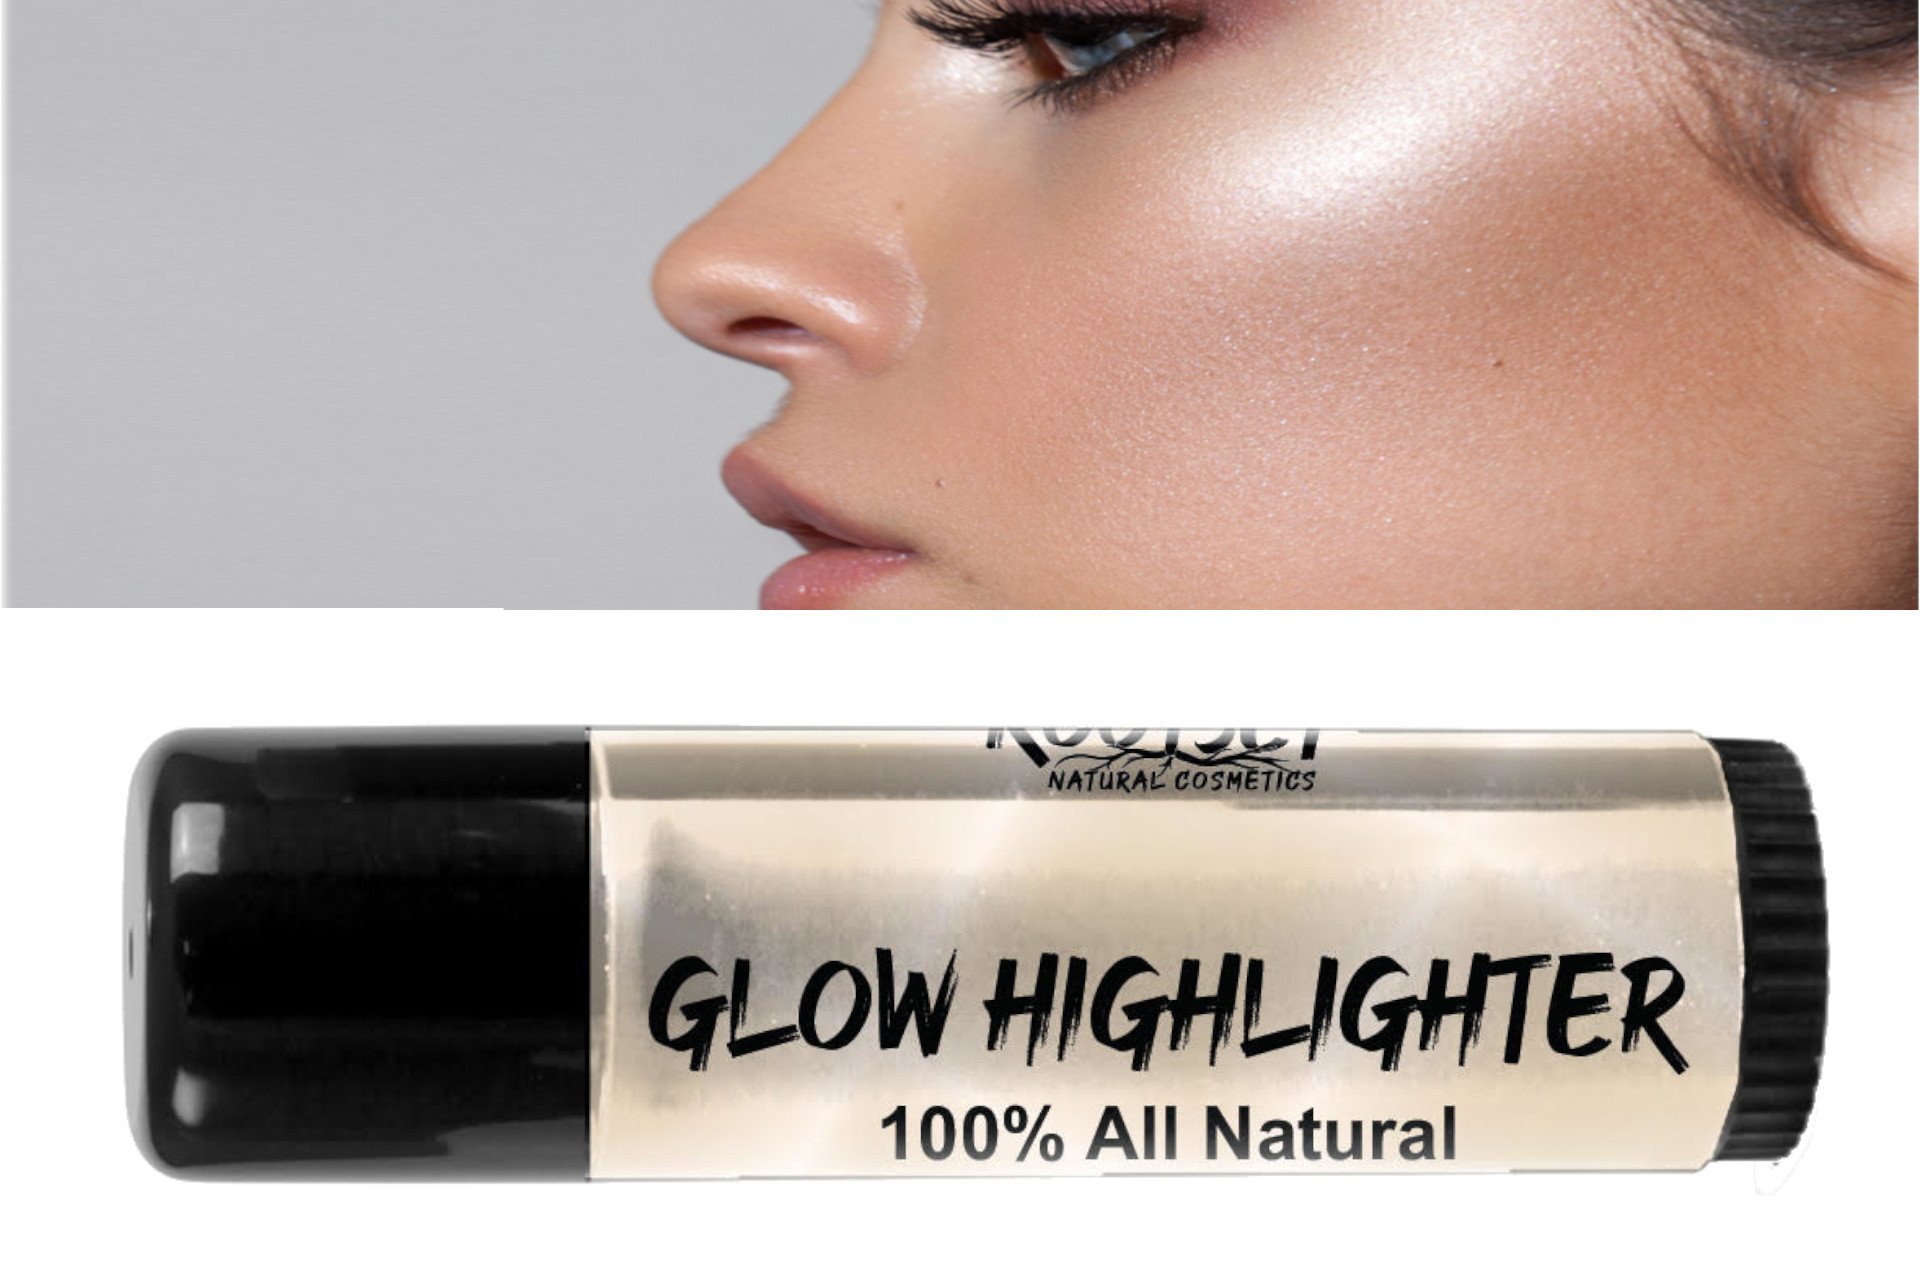 Glow Highlighter Jumbo 100% All Natural Lip & Body Balm.jpg